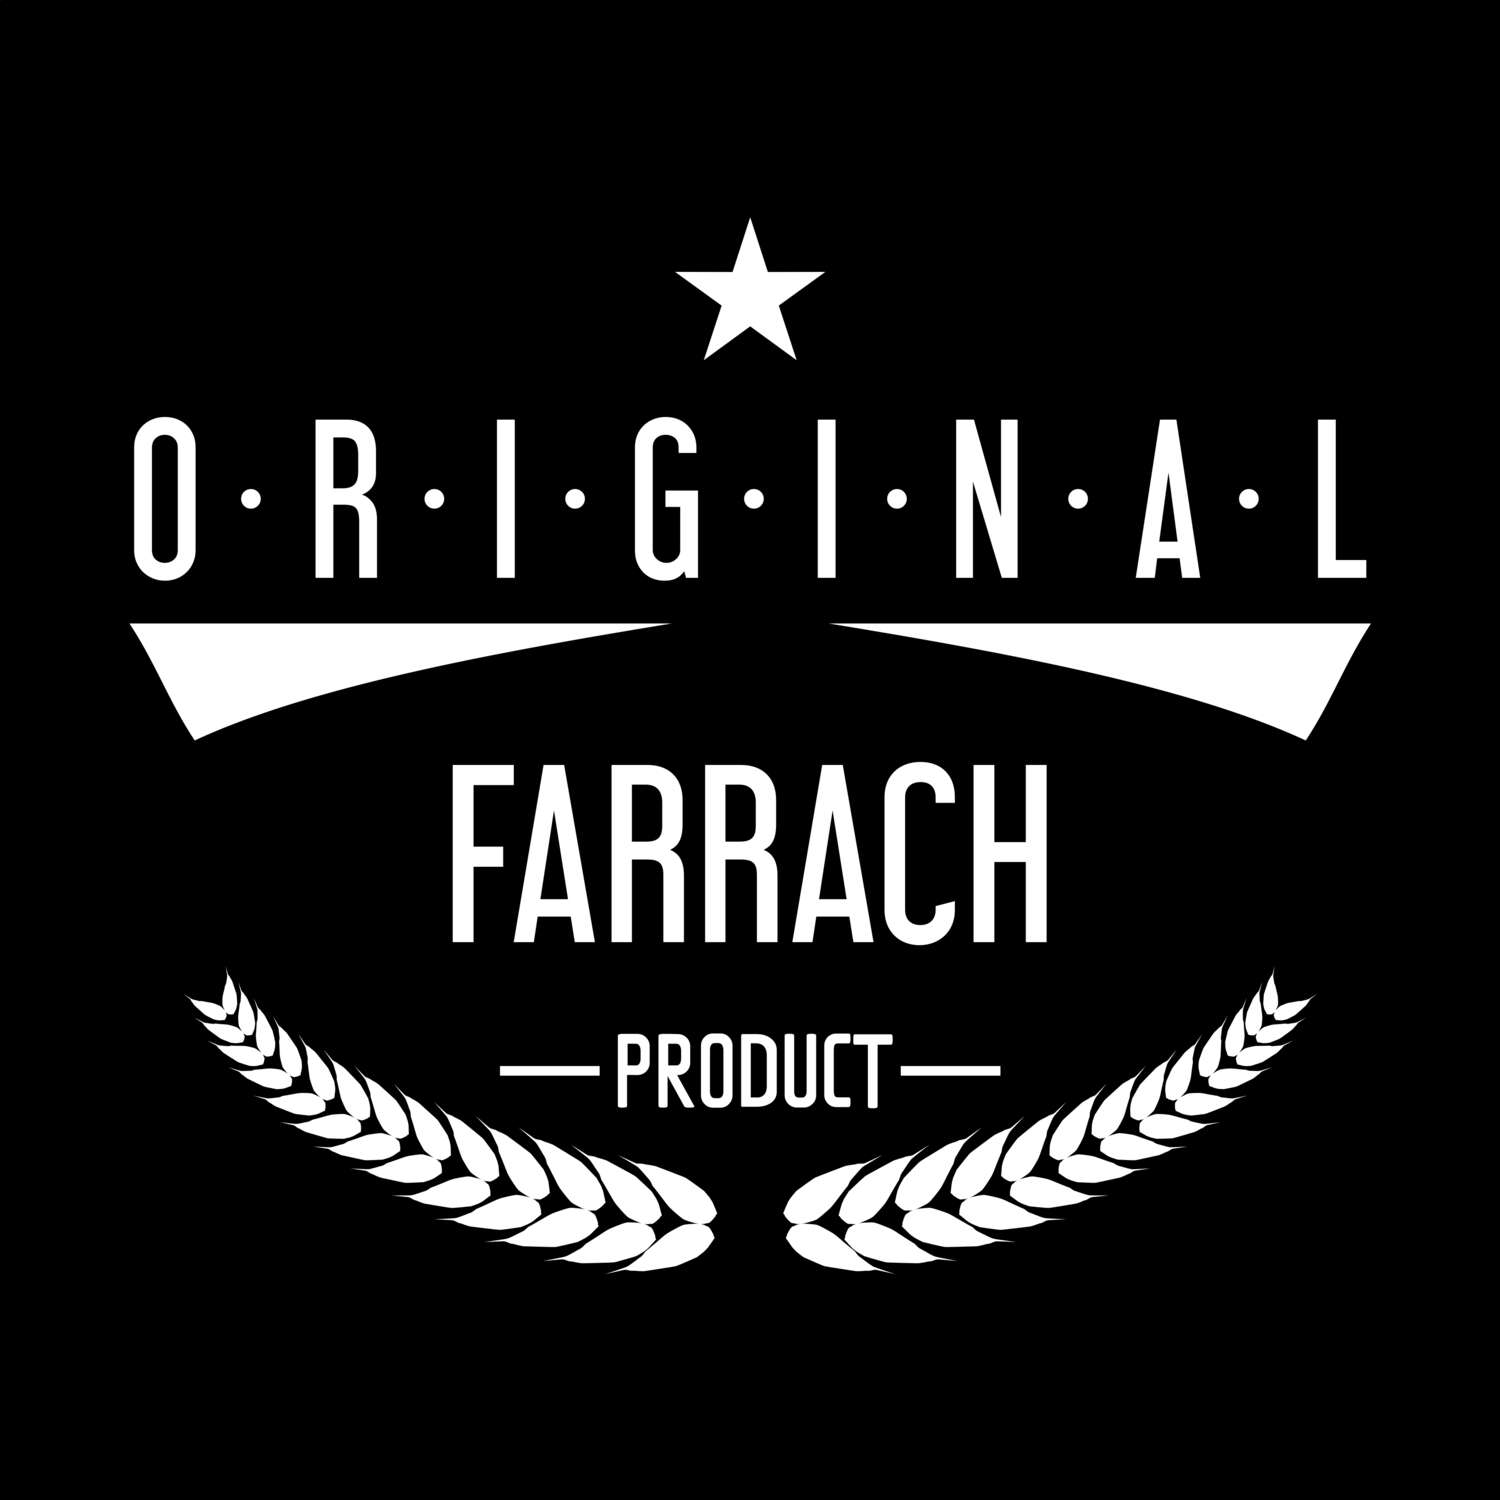 Farrach T-Shirt »Original Product«